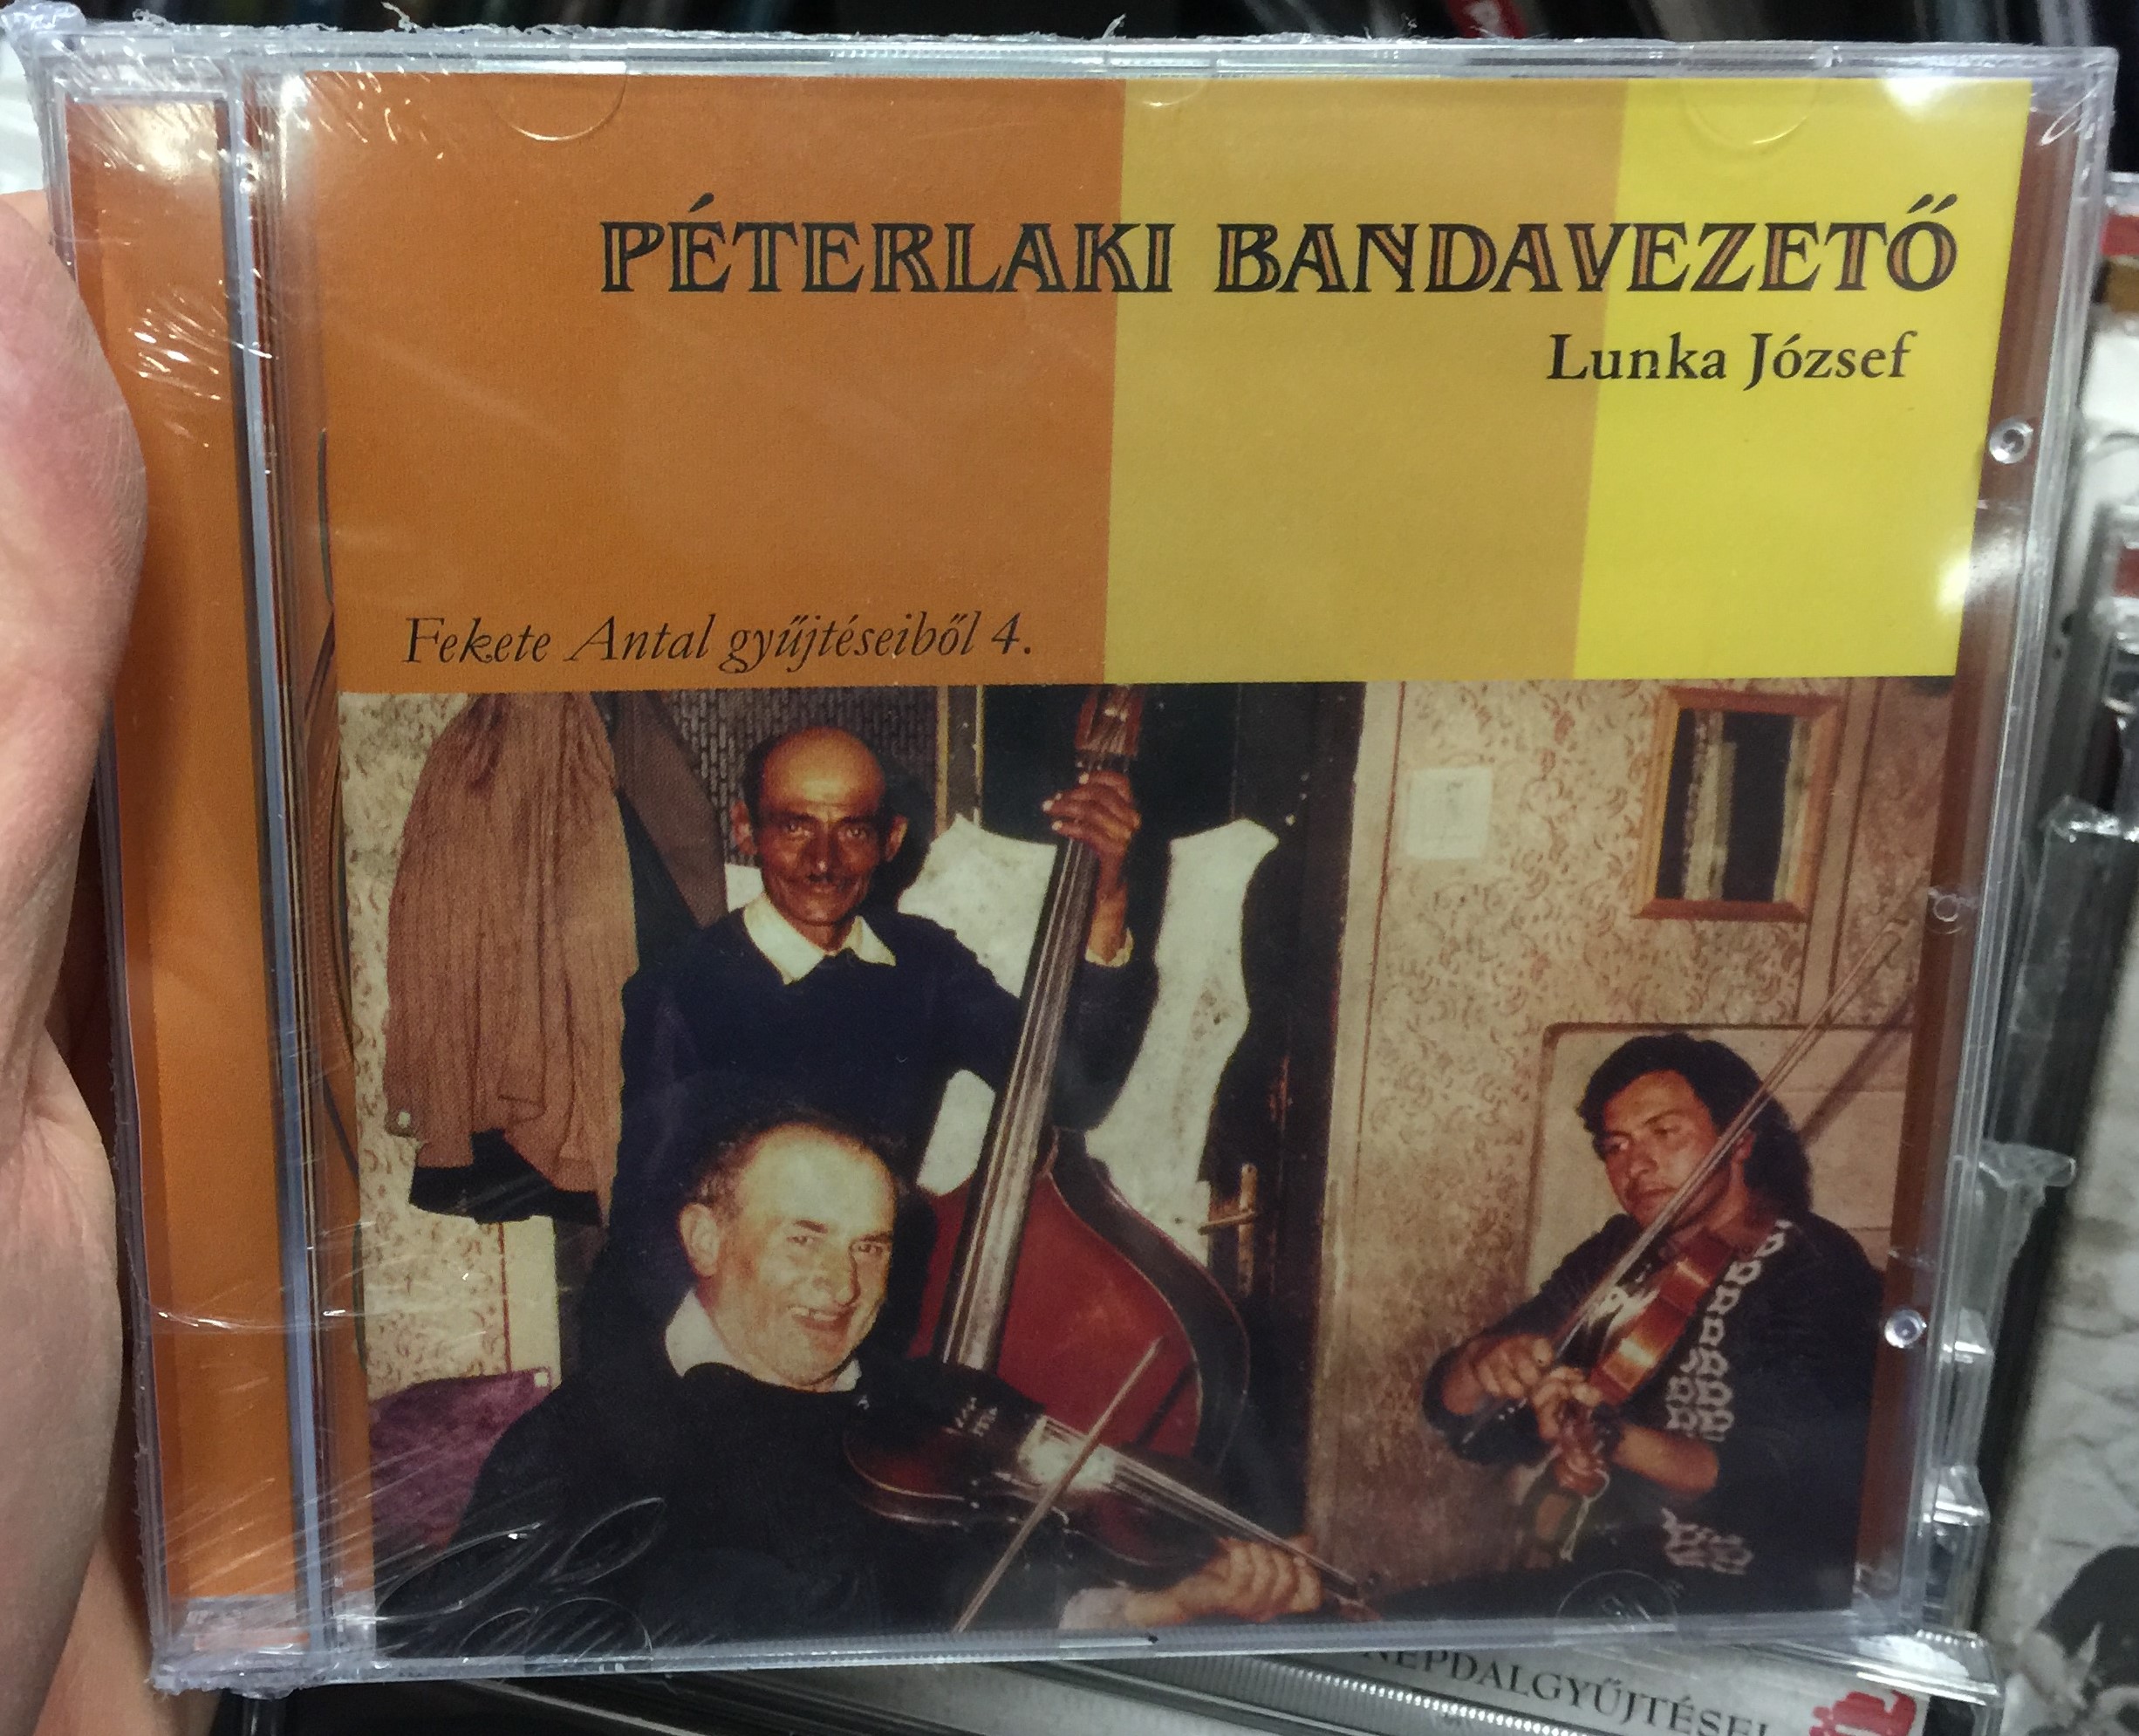 peterlaki-bandavezeto-lunka-j-zsef-fekete-antal-gyujteseibol-4.-folk-eur-pa-audio-cd-2006-fecd-024-1-.jpg